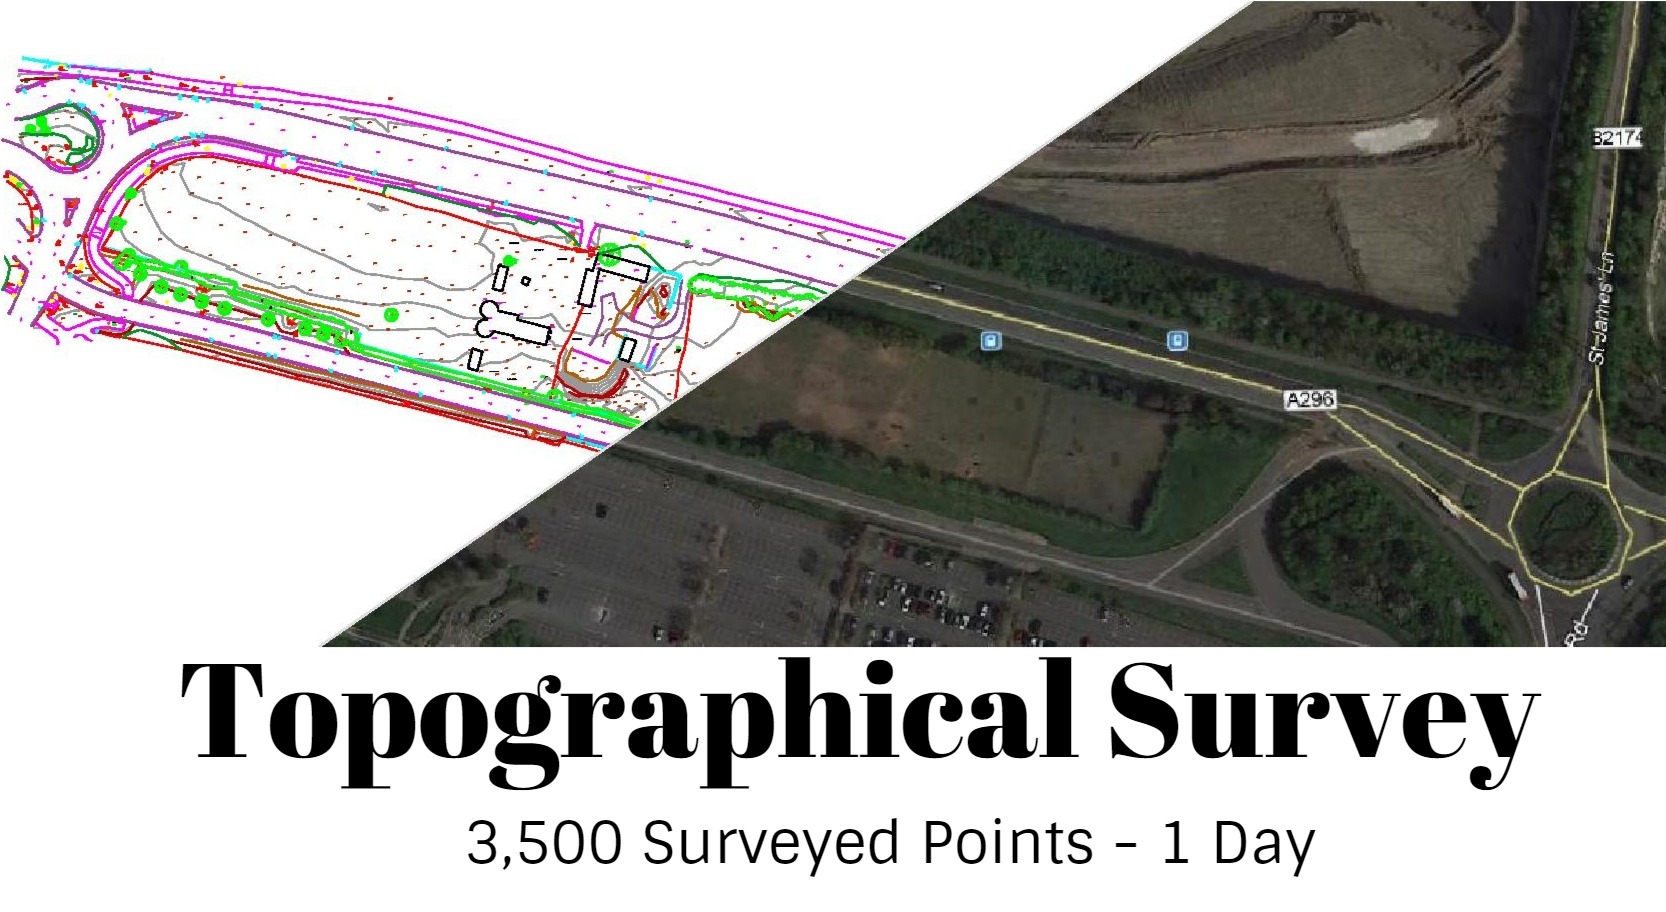  Land/Topographical Surveying - Image 2